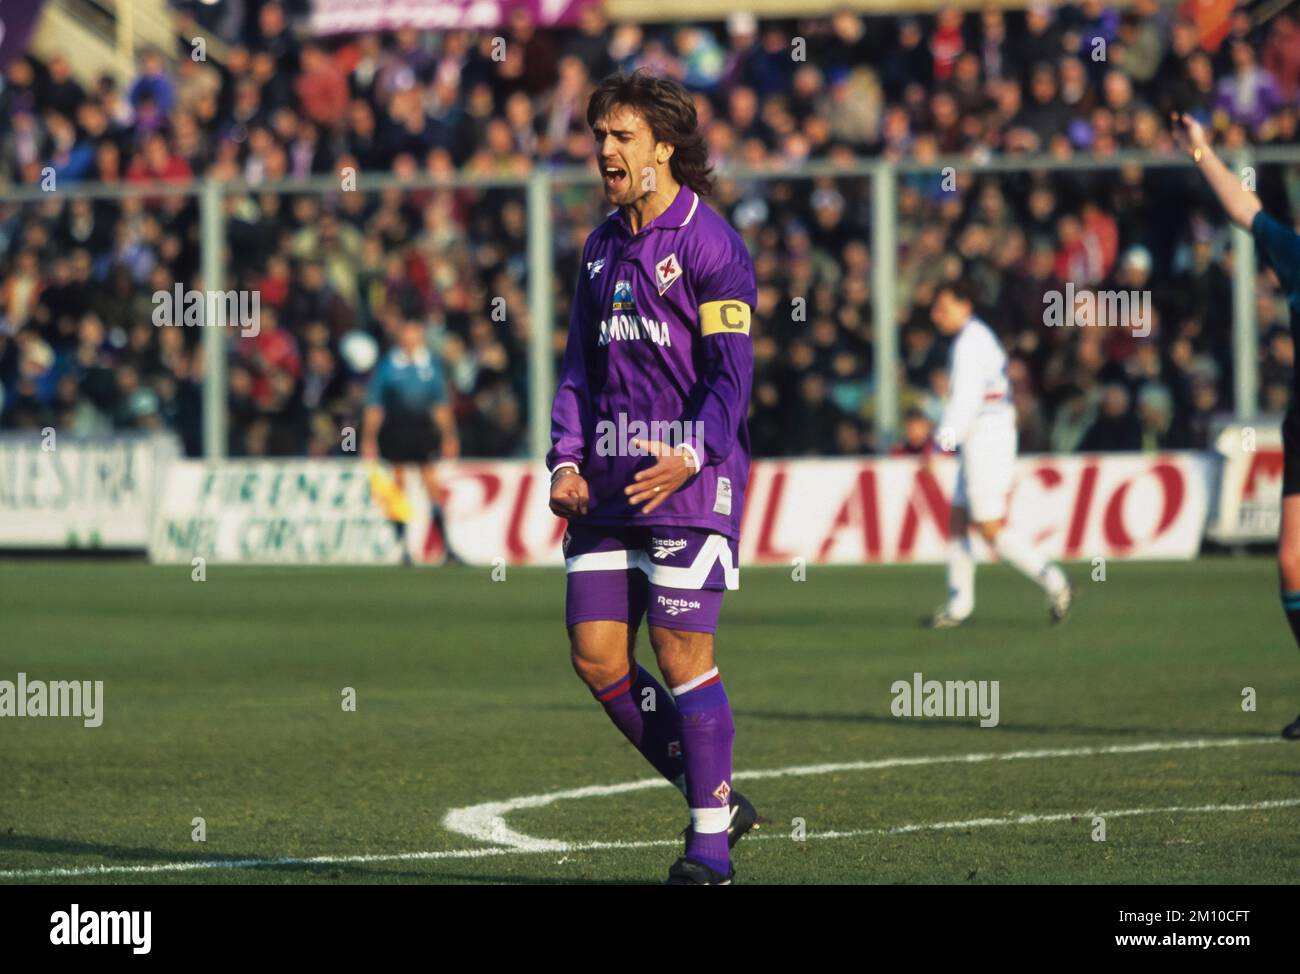 Fiorentina batistuta hi-res stock photography and images - Alamy